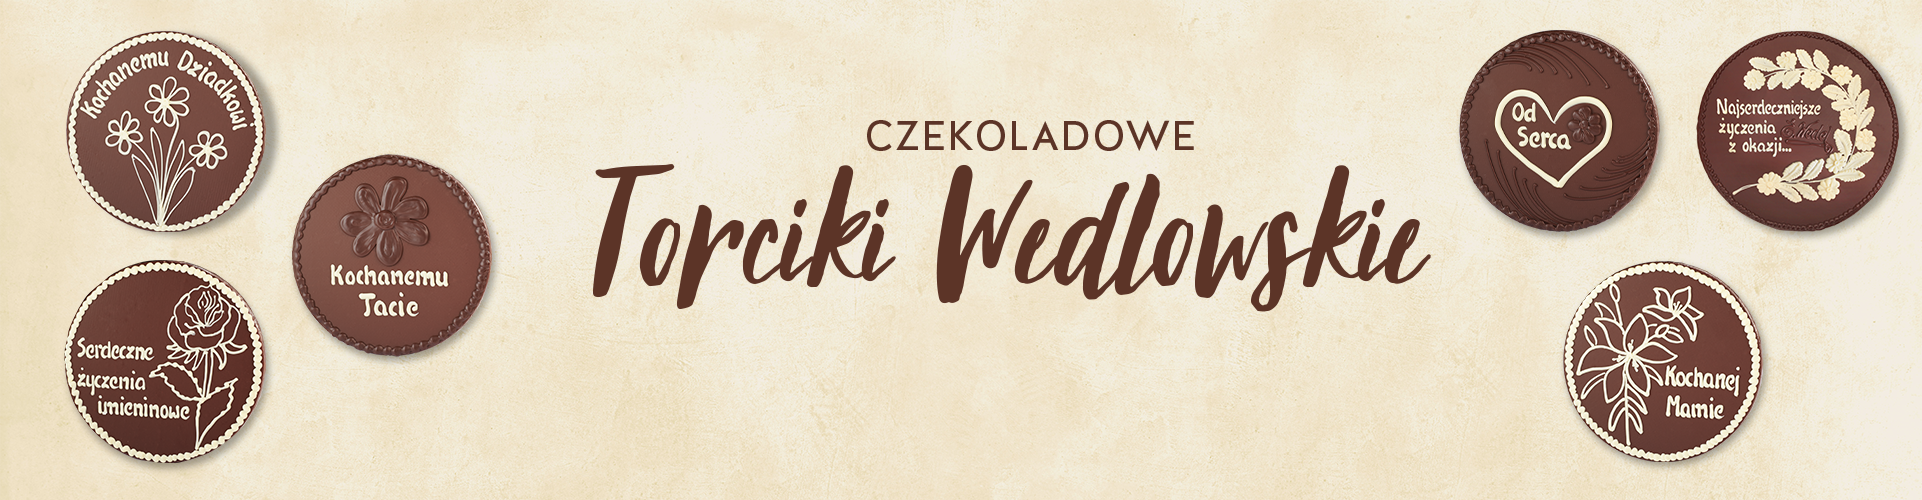 wedel-baner-torcik-wedlowski